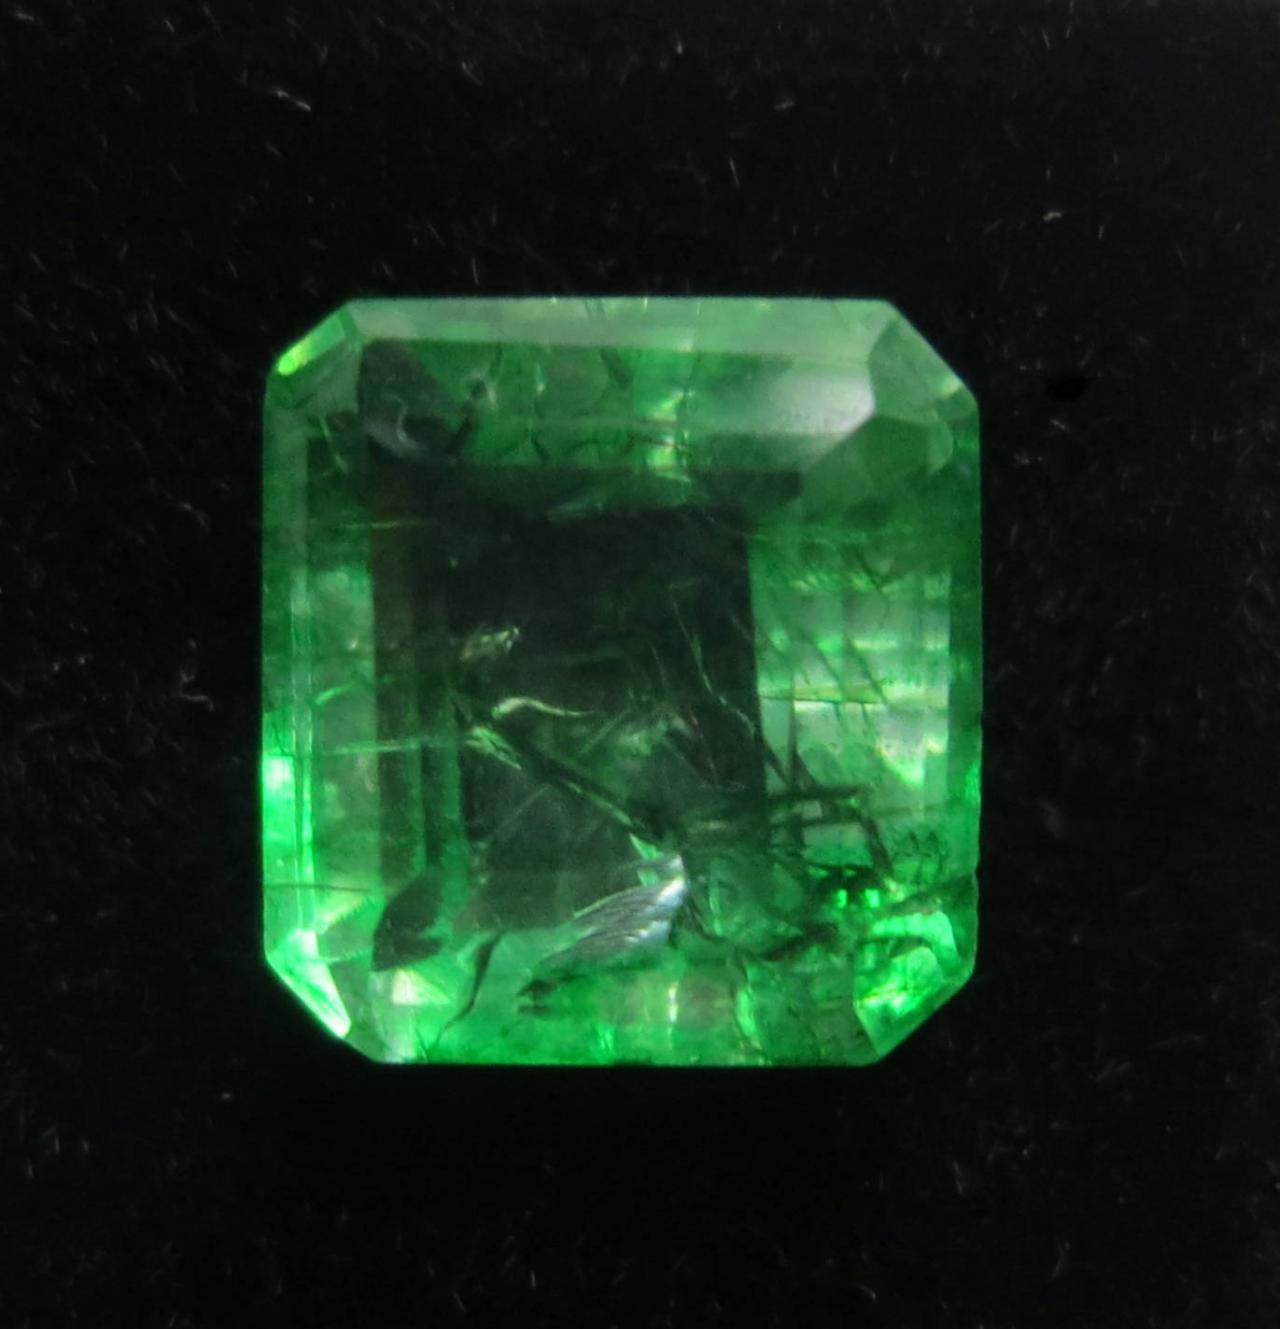 Natural Emerald Loose Emerald Colombian Emerald